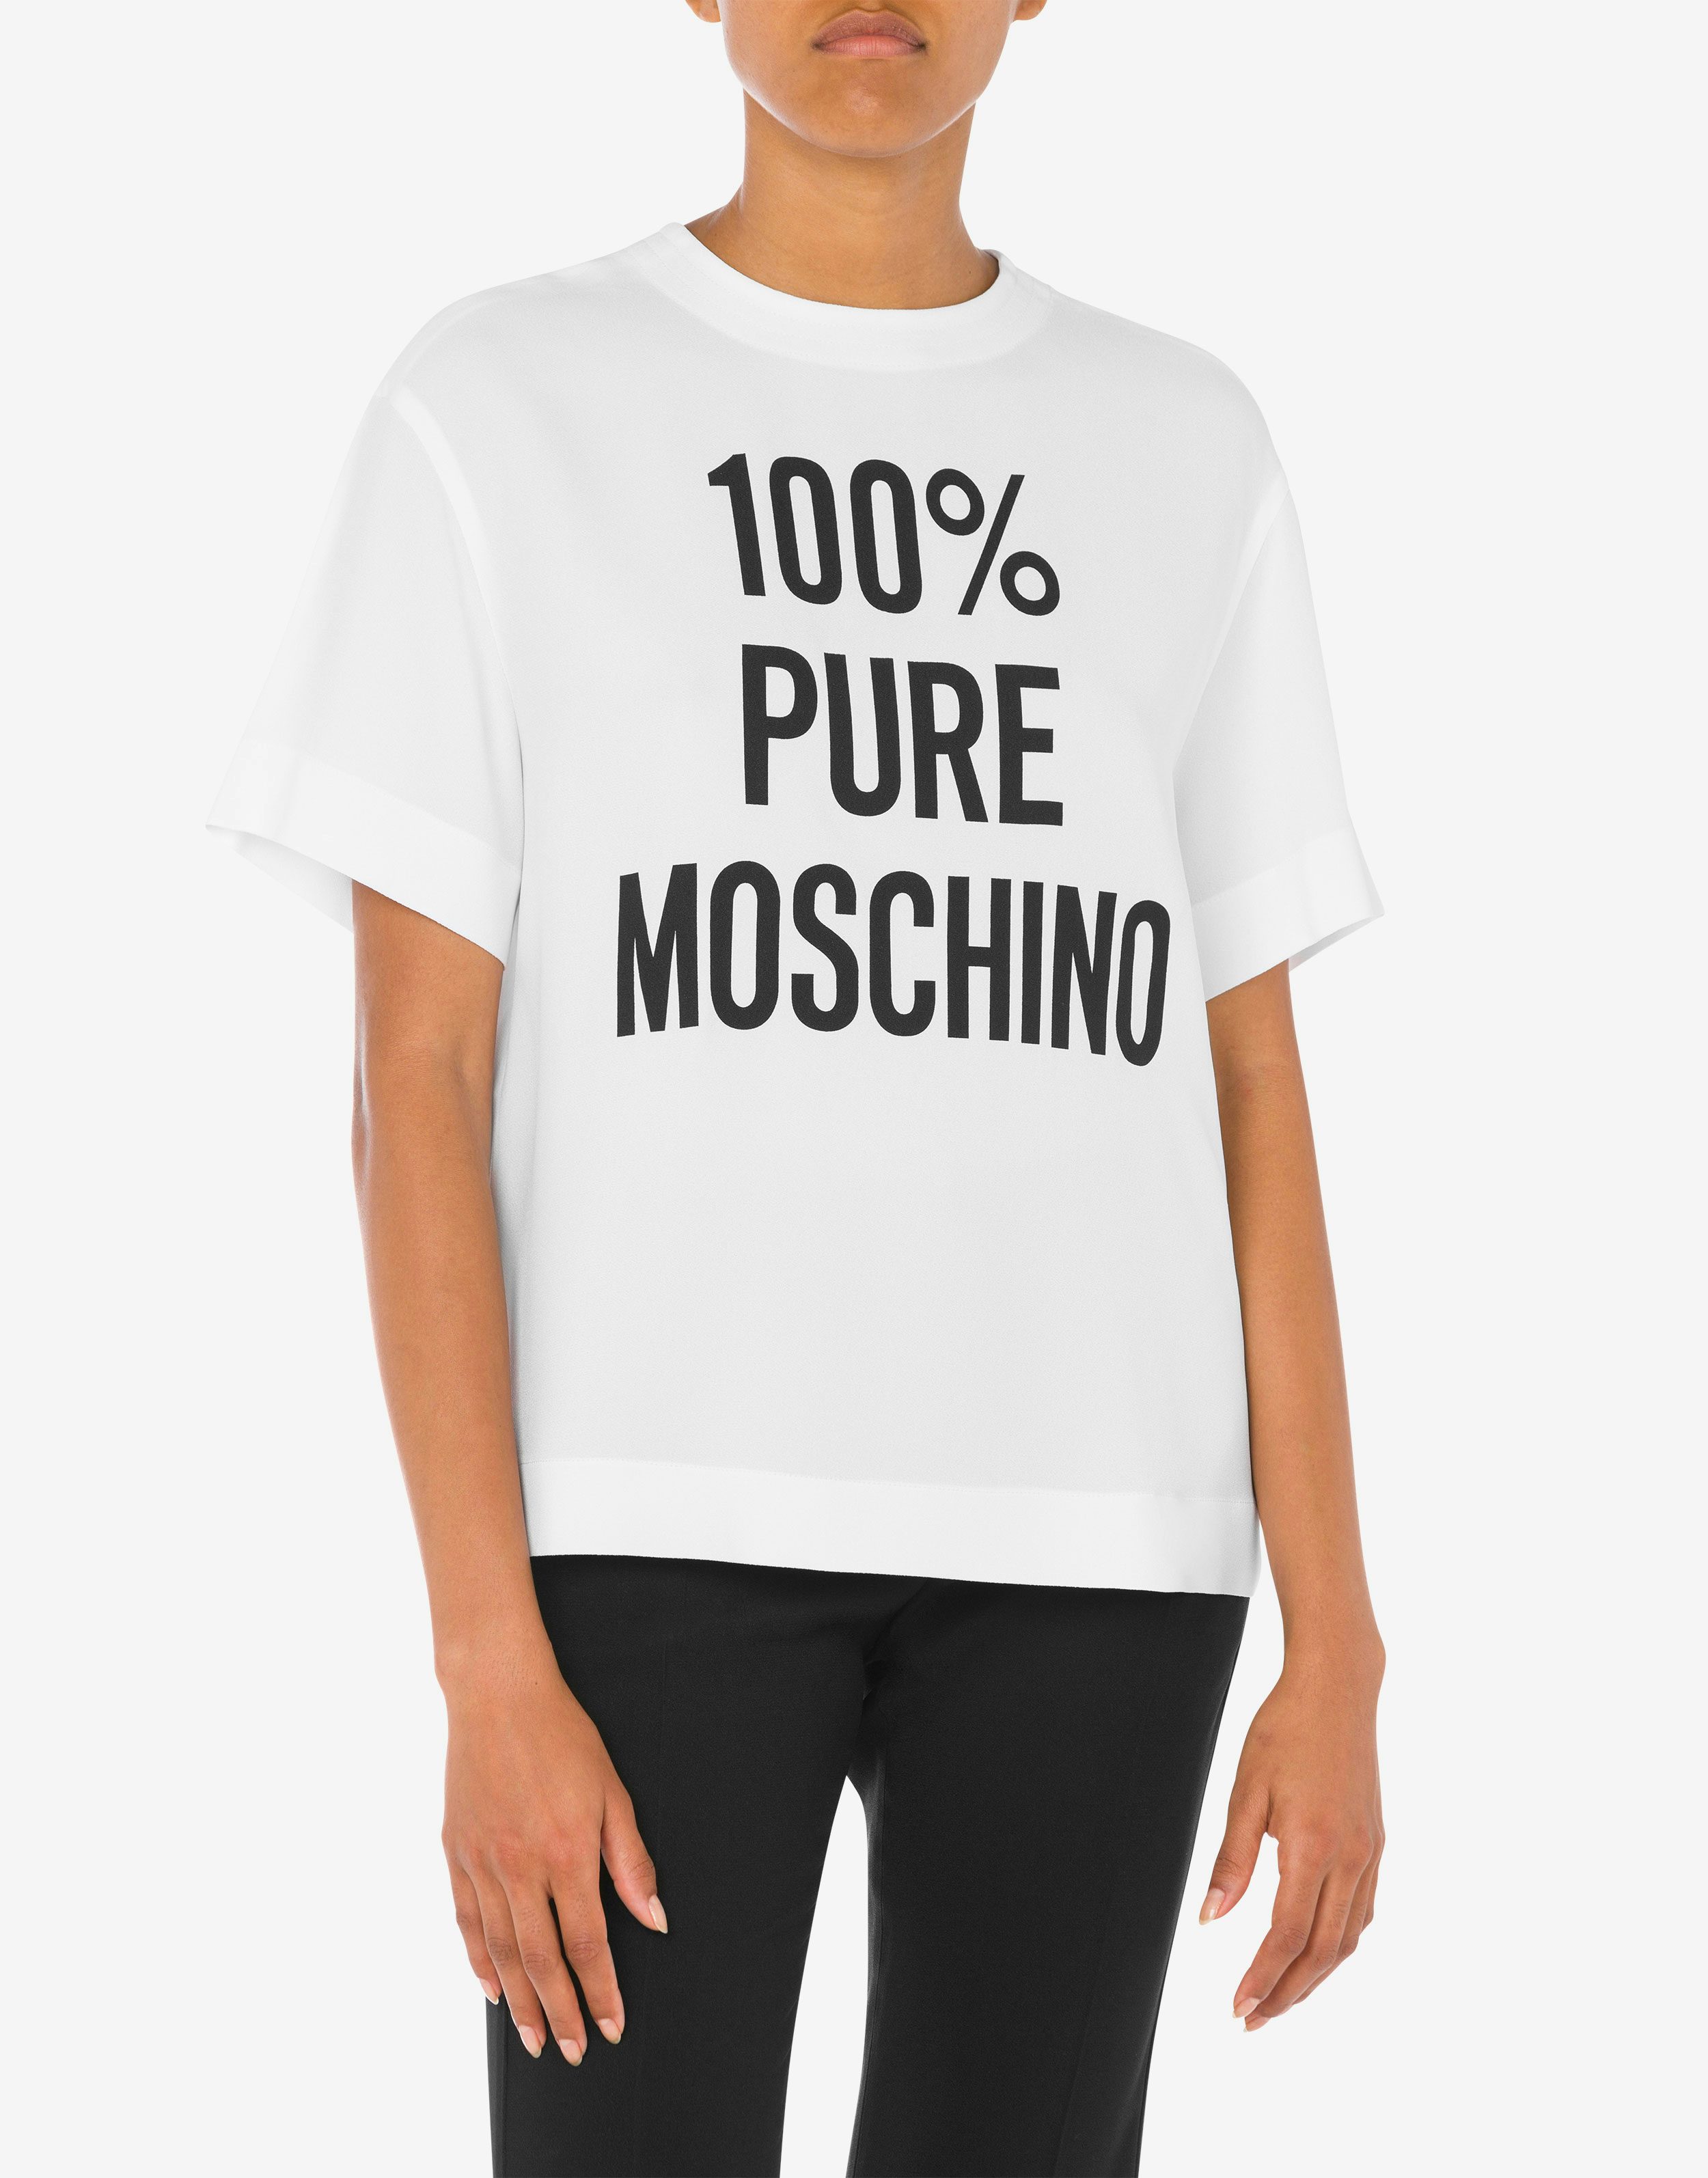 T-Shirt aus Envers-Satin 100% Pure Moschino Print